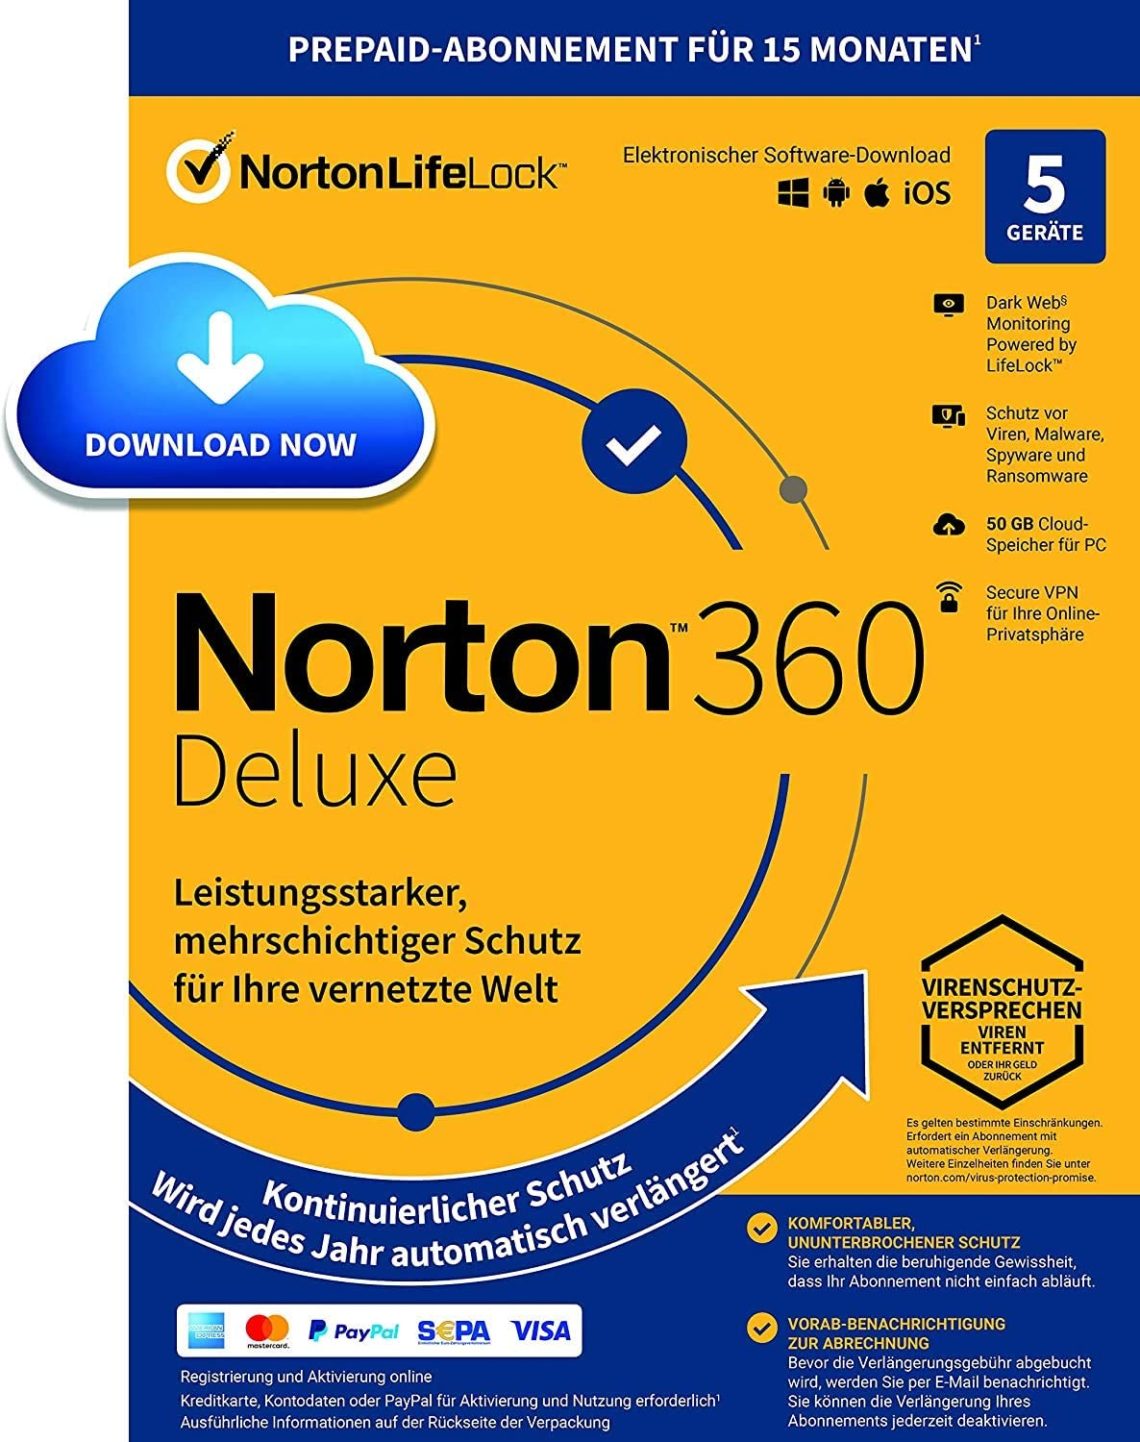 lifelock for norton 360